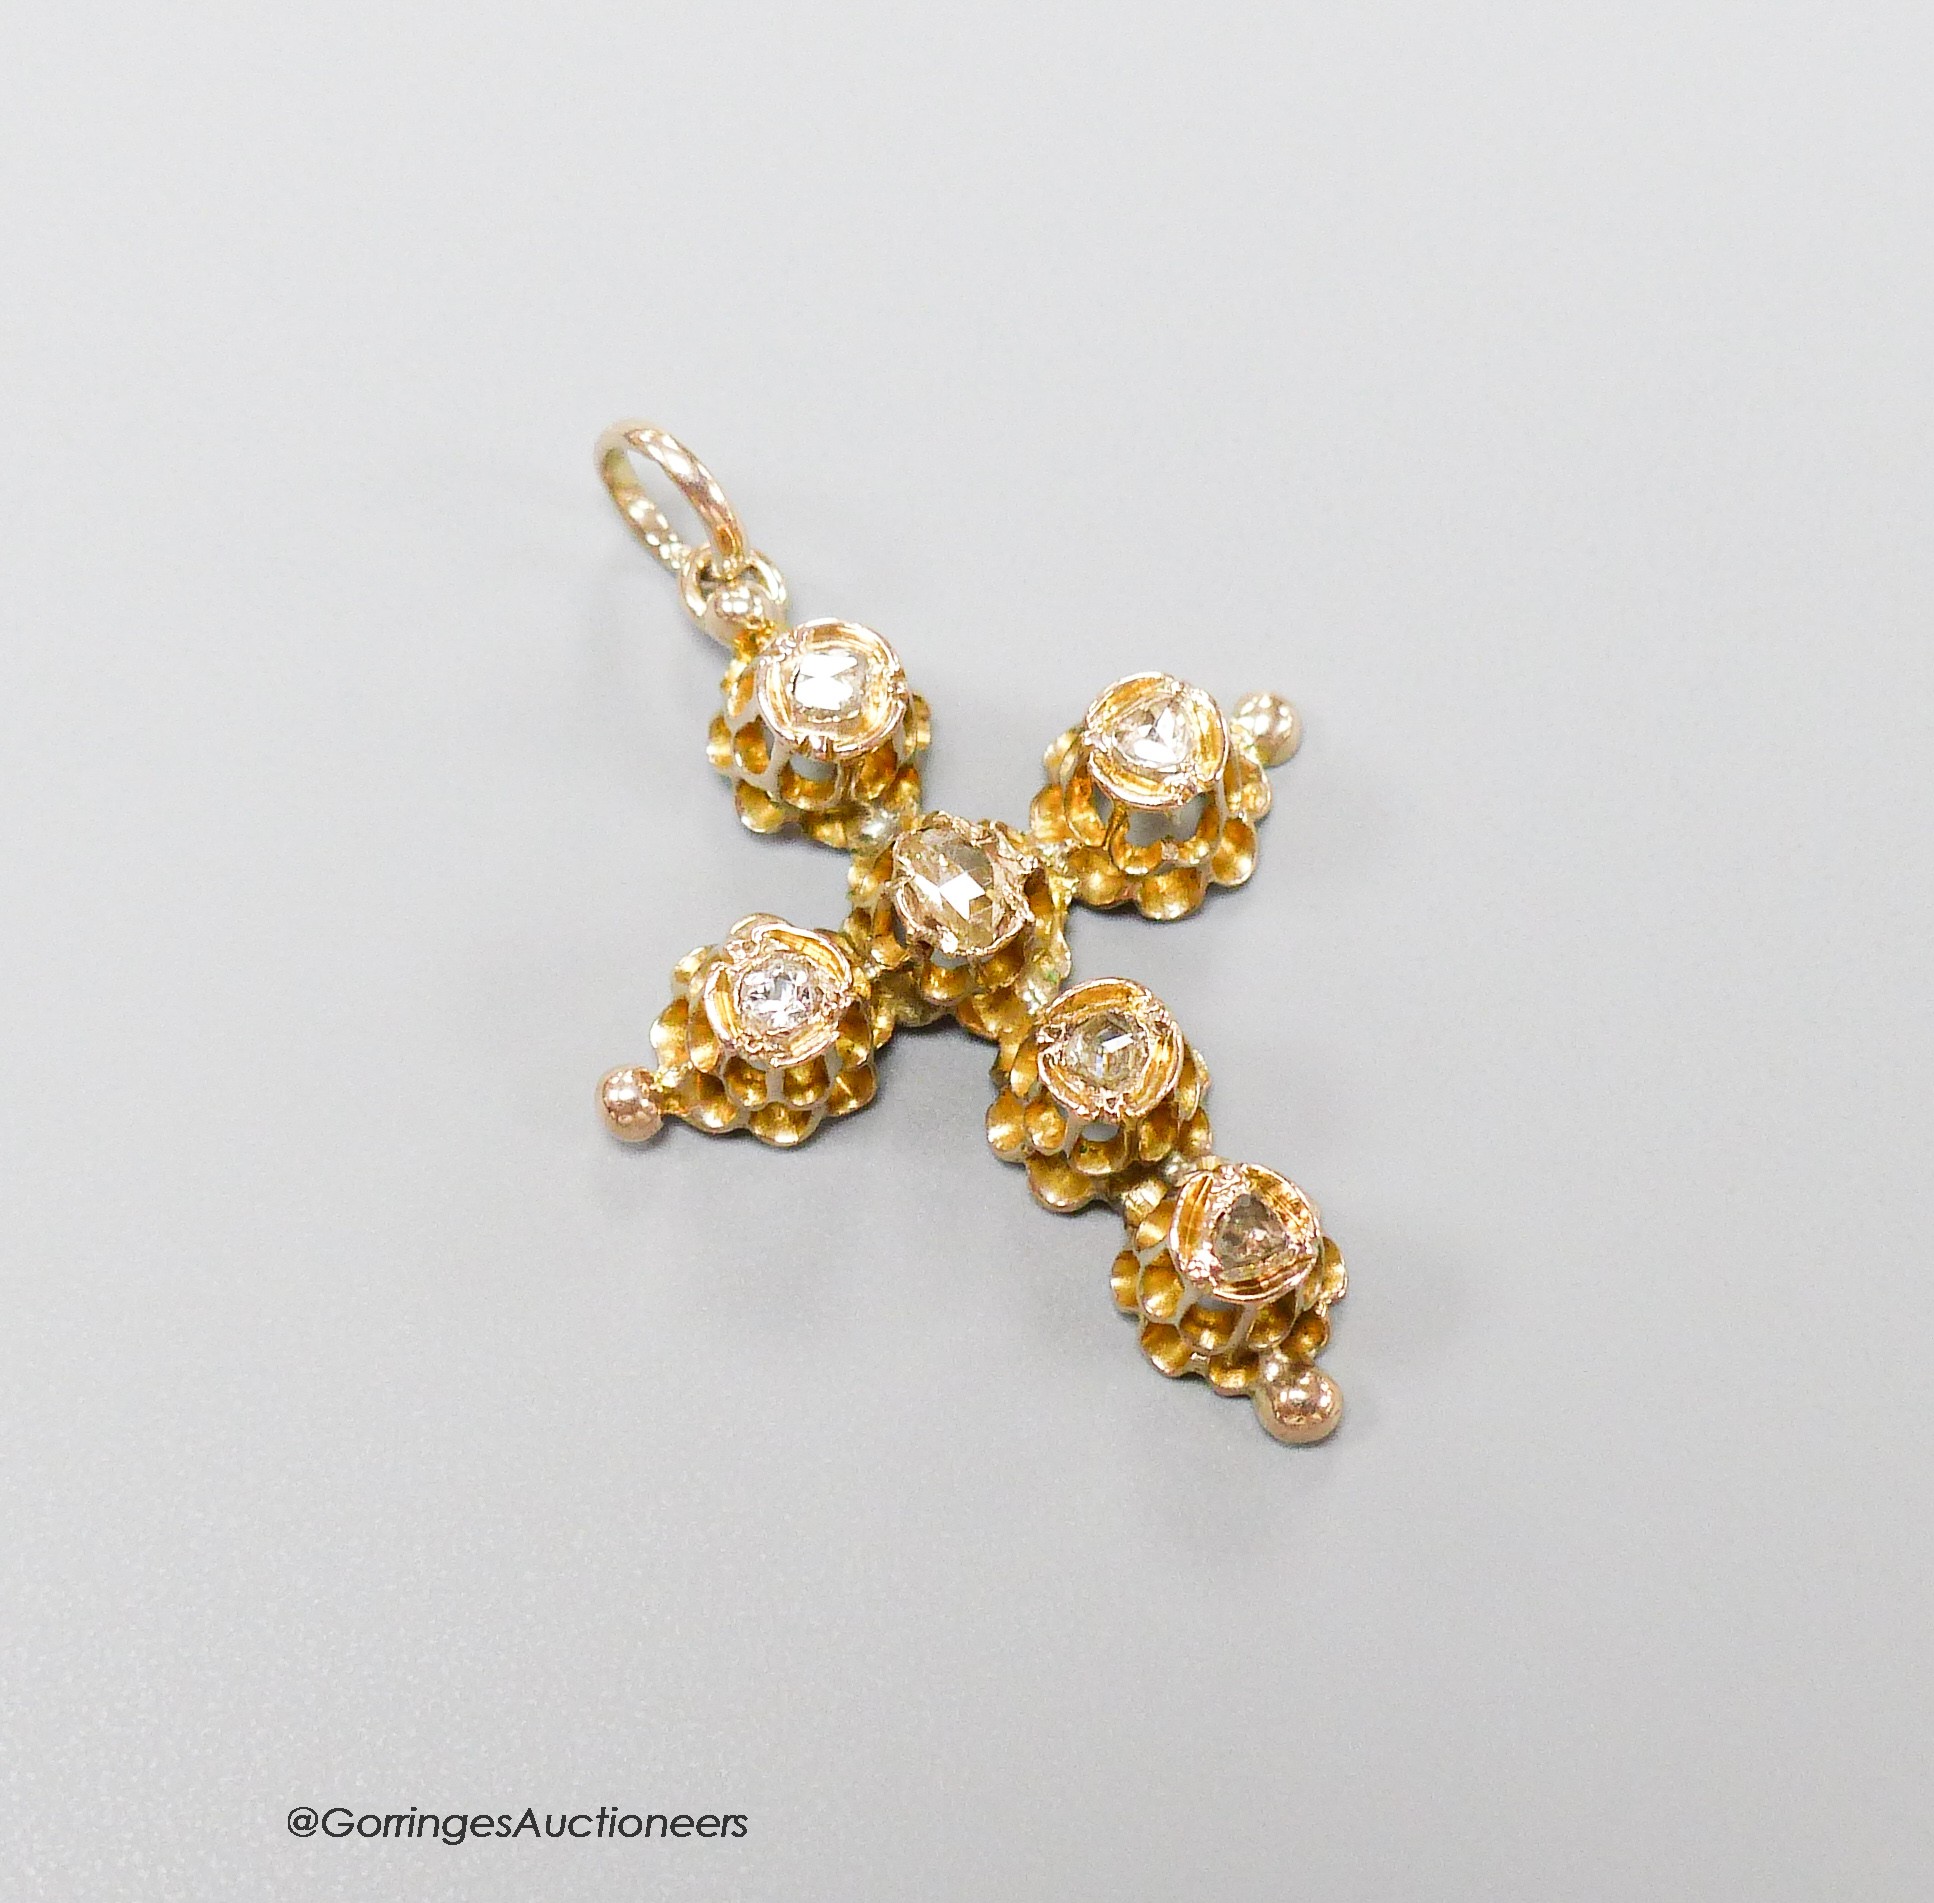 Am antique yellow metal and six stone rose cut diamond set cross pendant, 30mm, gross 2.6 grams.